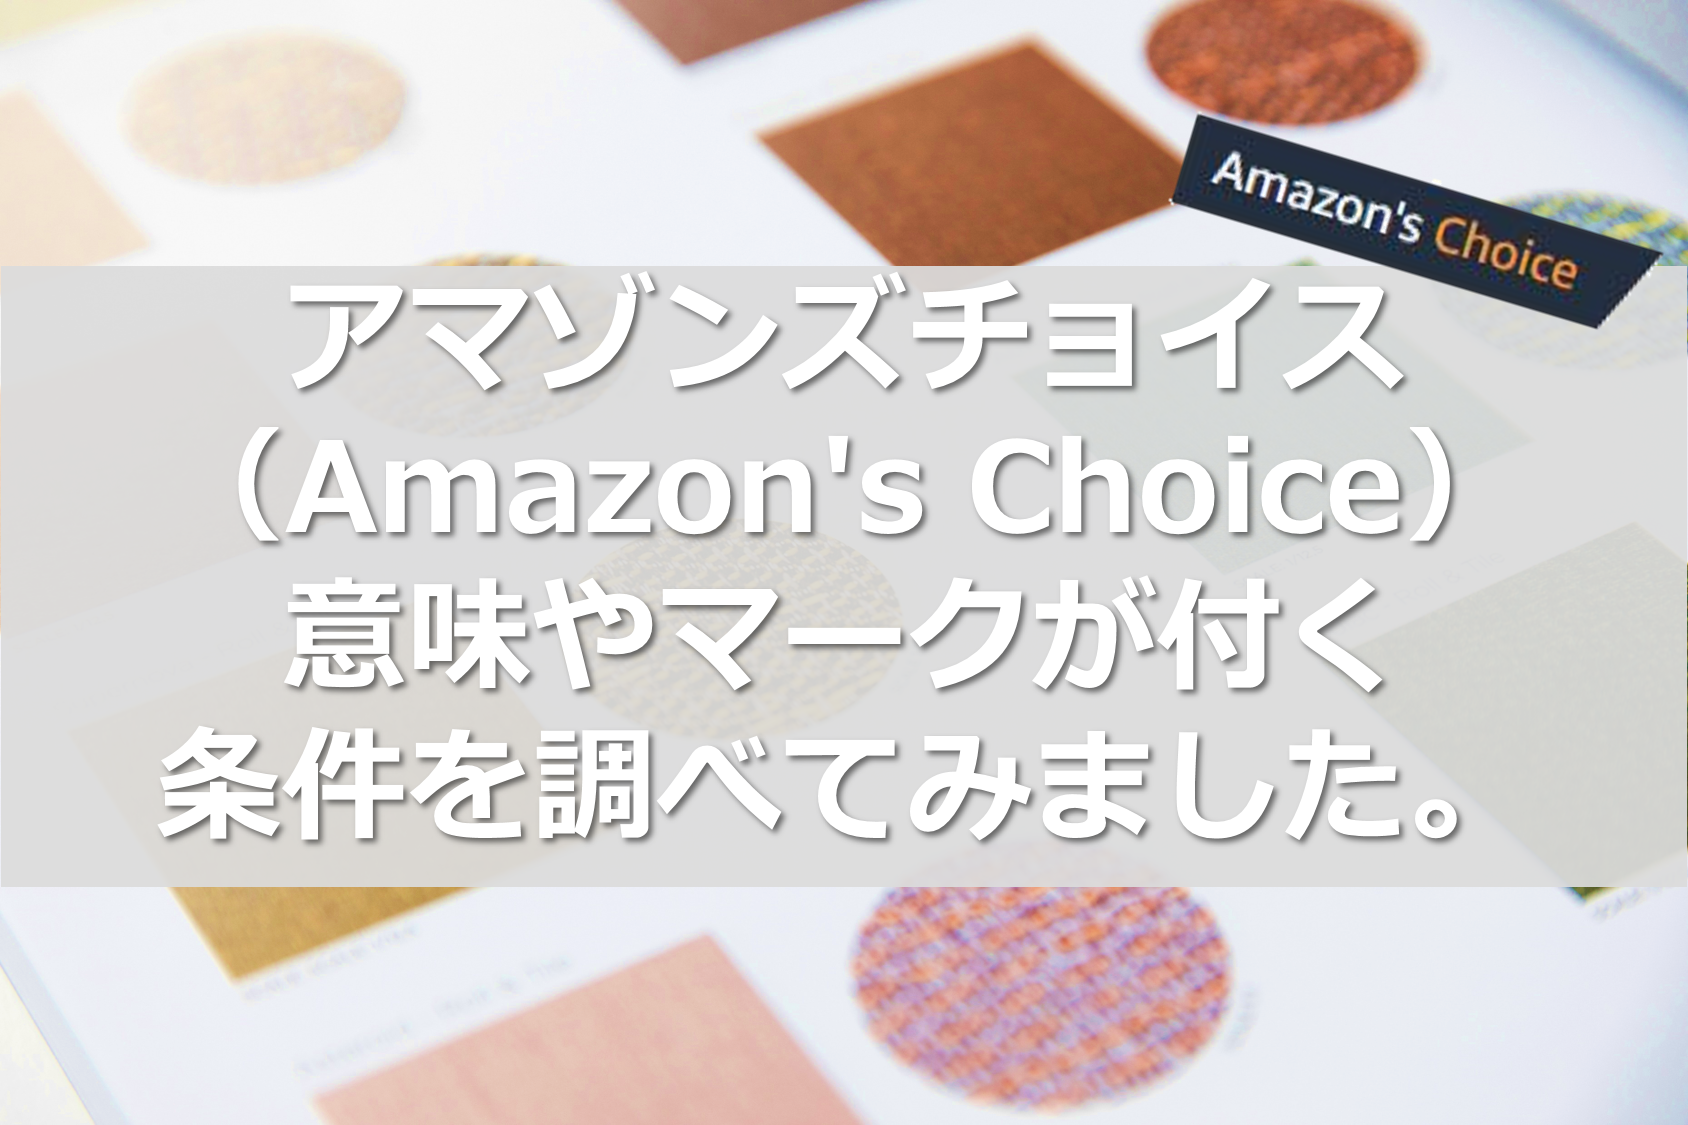 Amazon's Choice